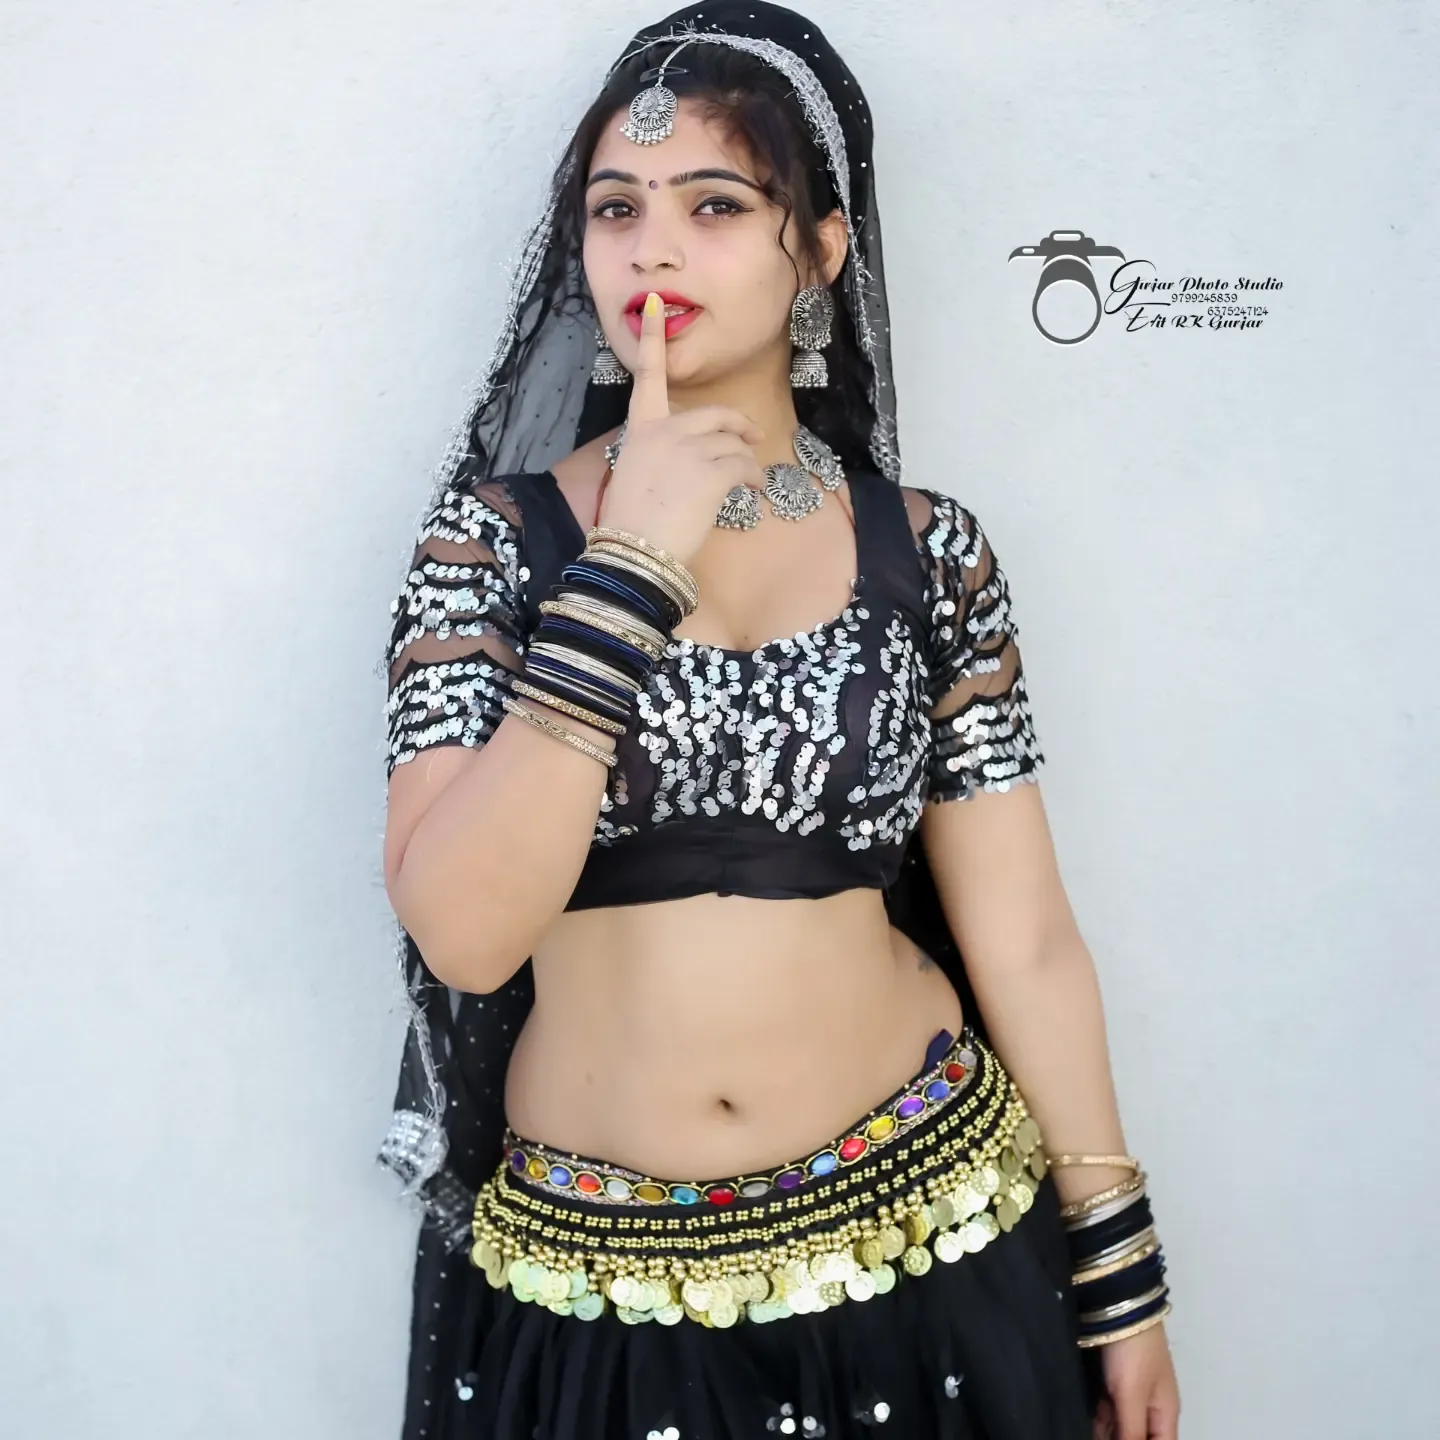 Arohi Nayak Photo Gallery, Video, IGTV, Images, Shooting, Modeling Studio